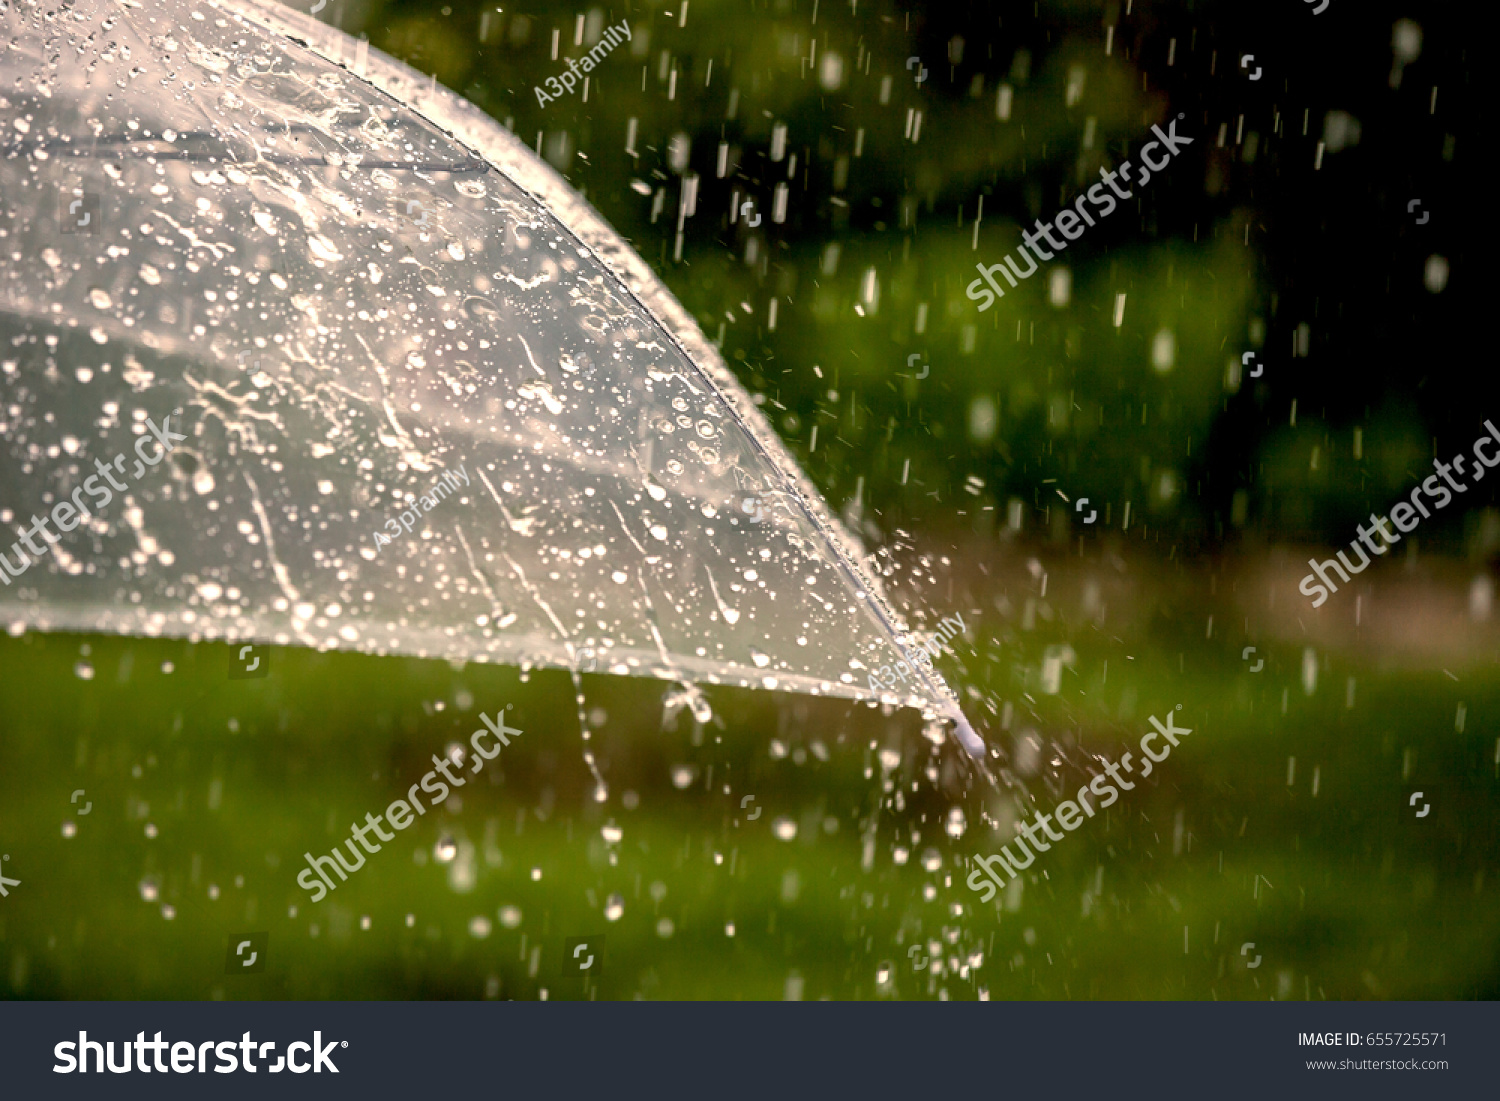 Umbrella in the rain in green nature background #655725571